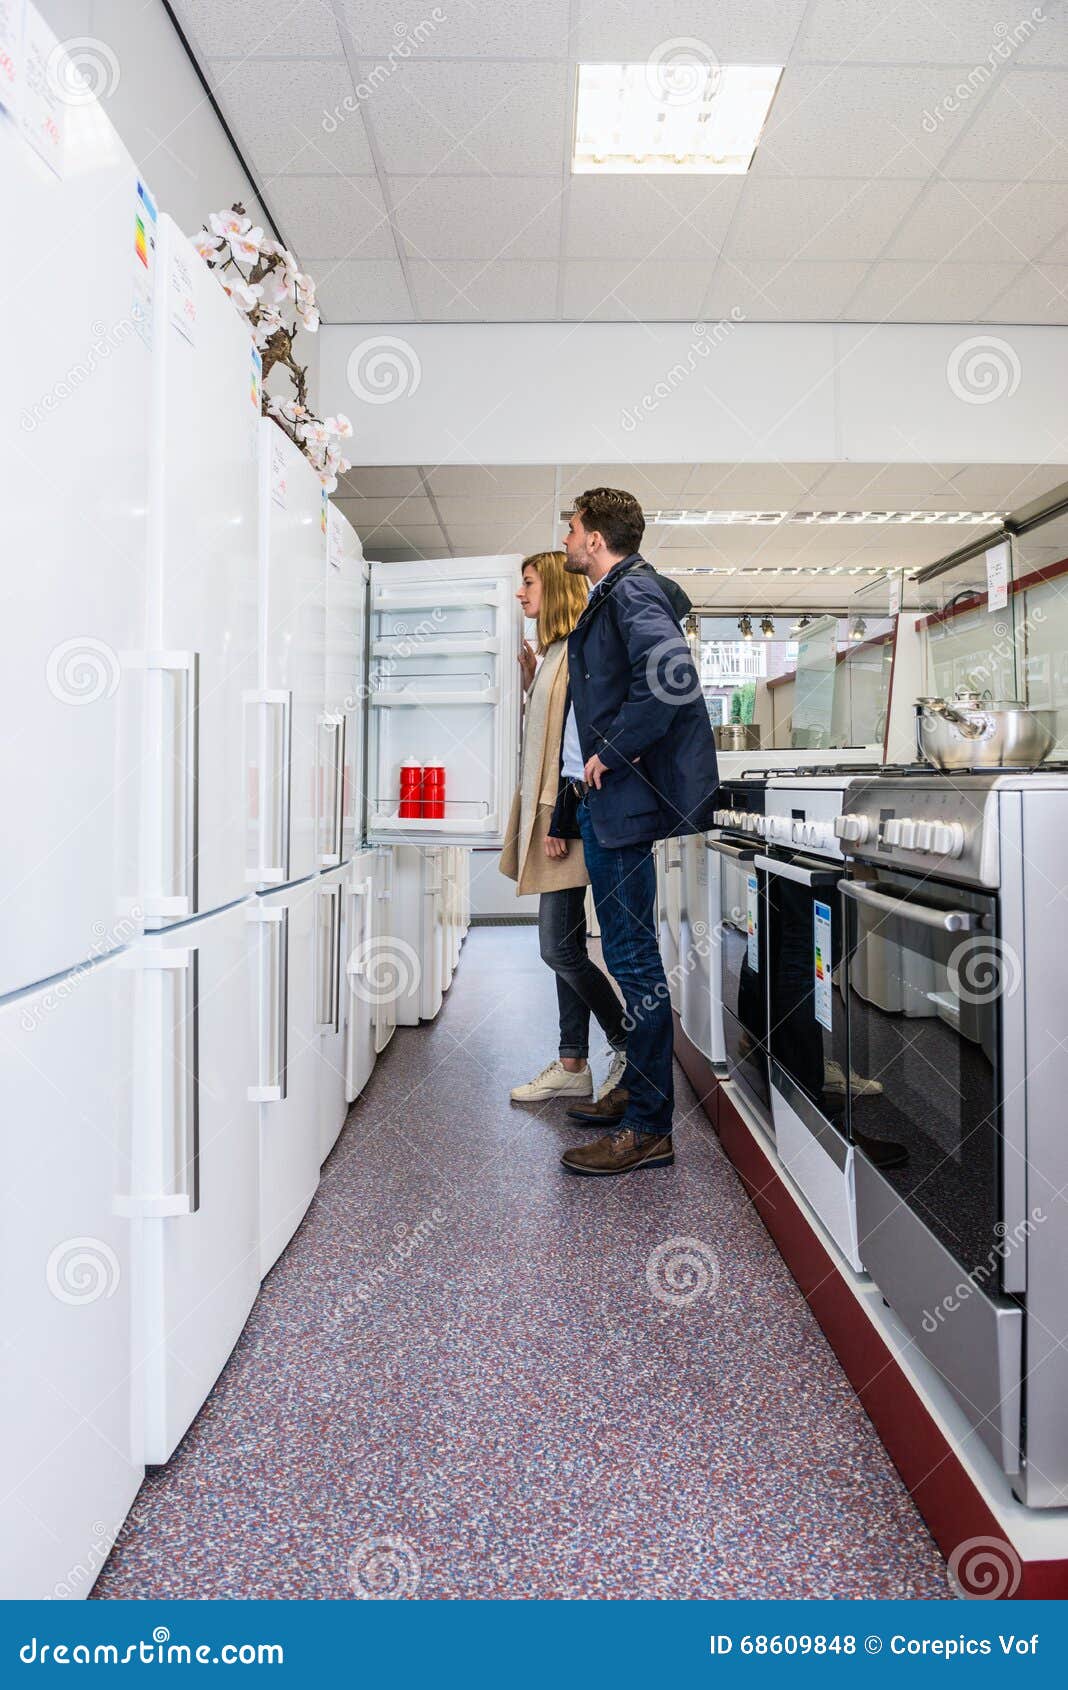 couple buying refrigerator in hypermarket